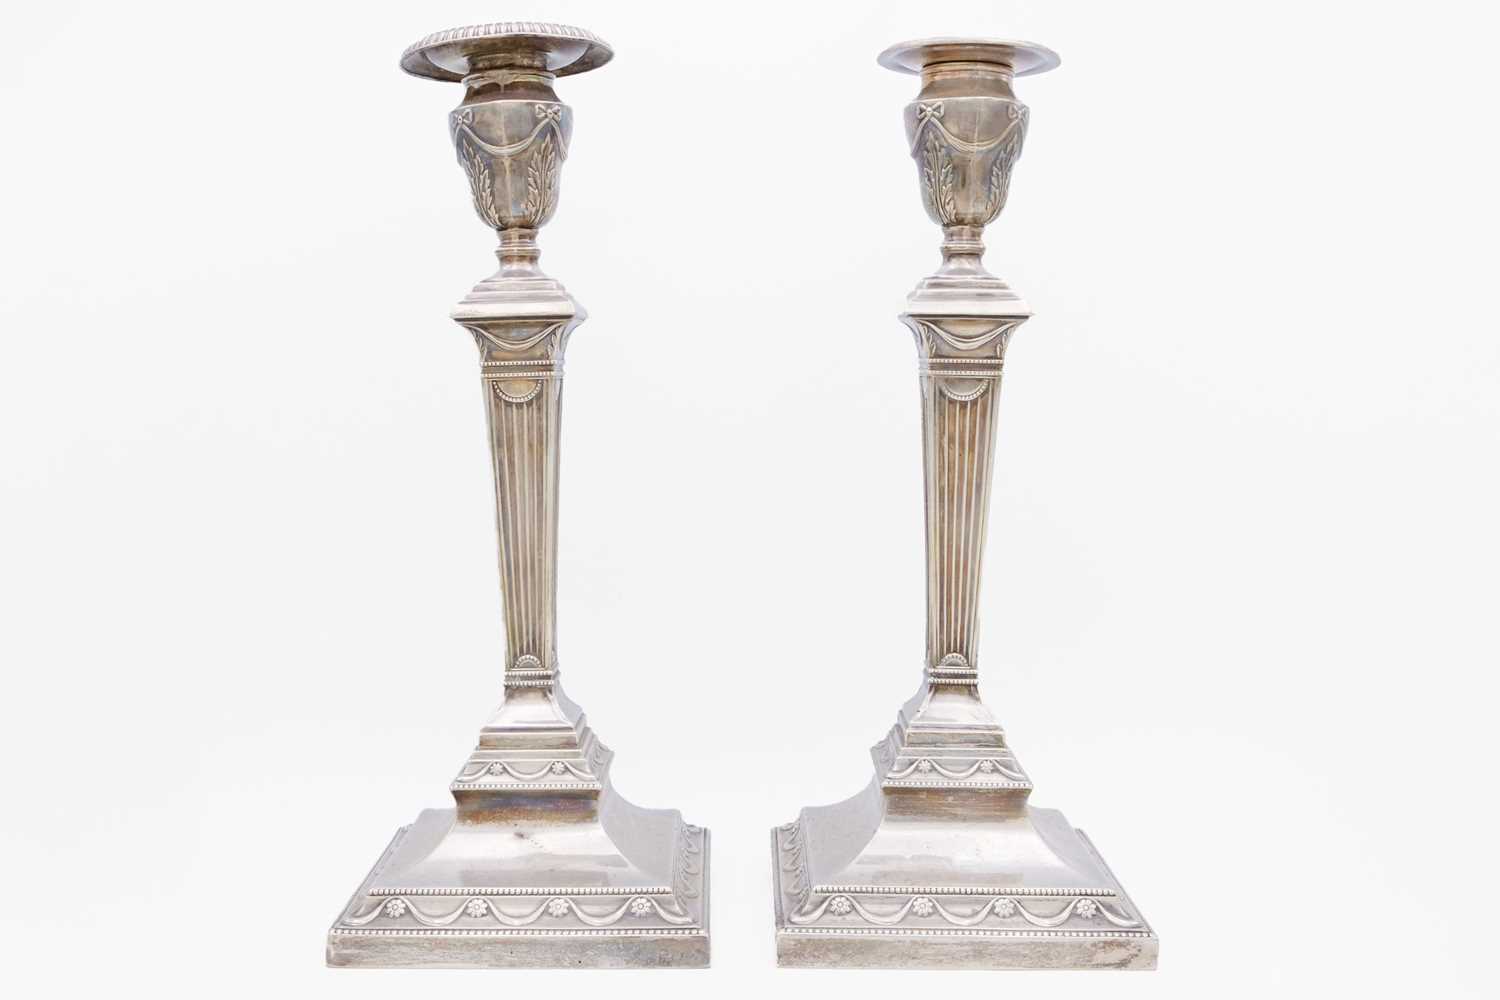 Lot 2 - An Edwardian silver pair of Corinthian column table candlesticks by Hawksworth, Eyre & Co Ltd.